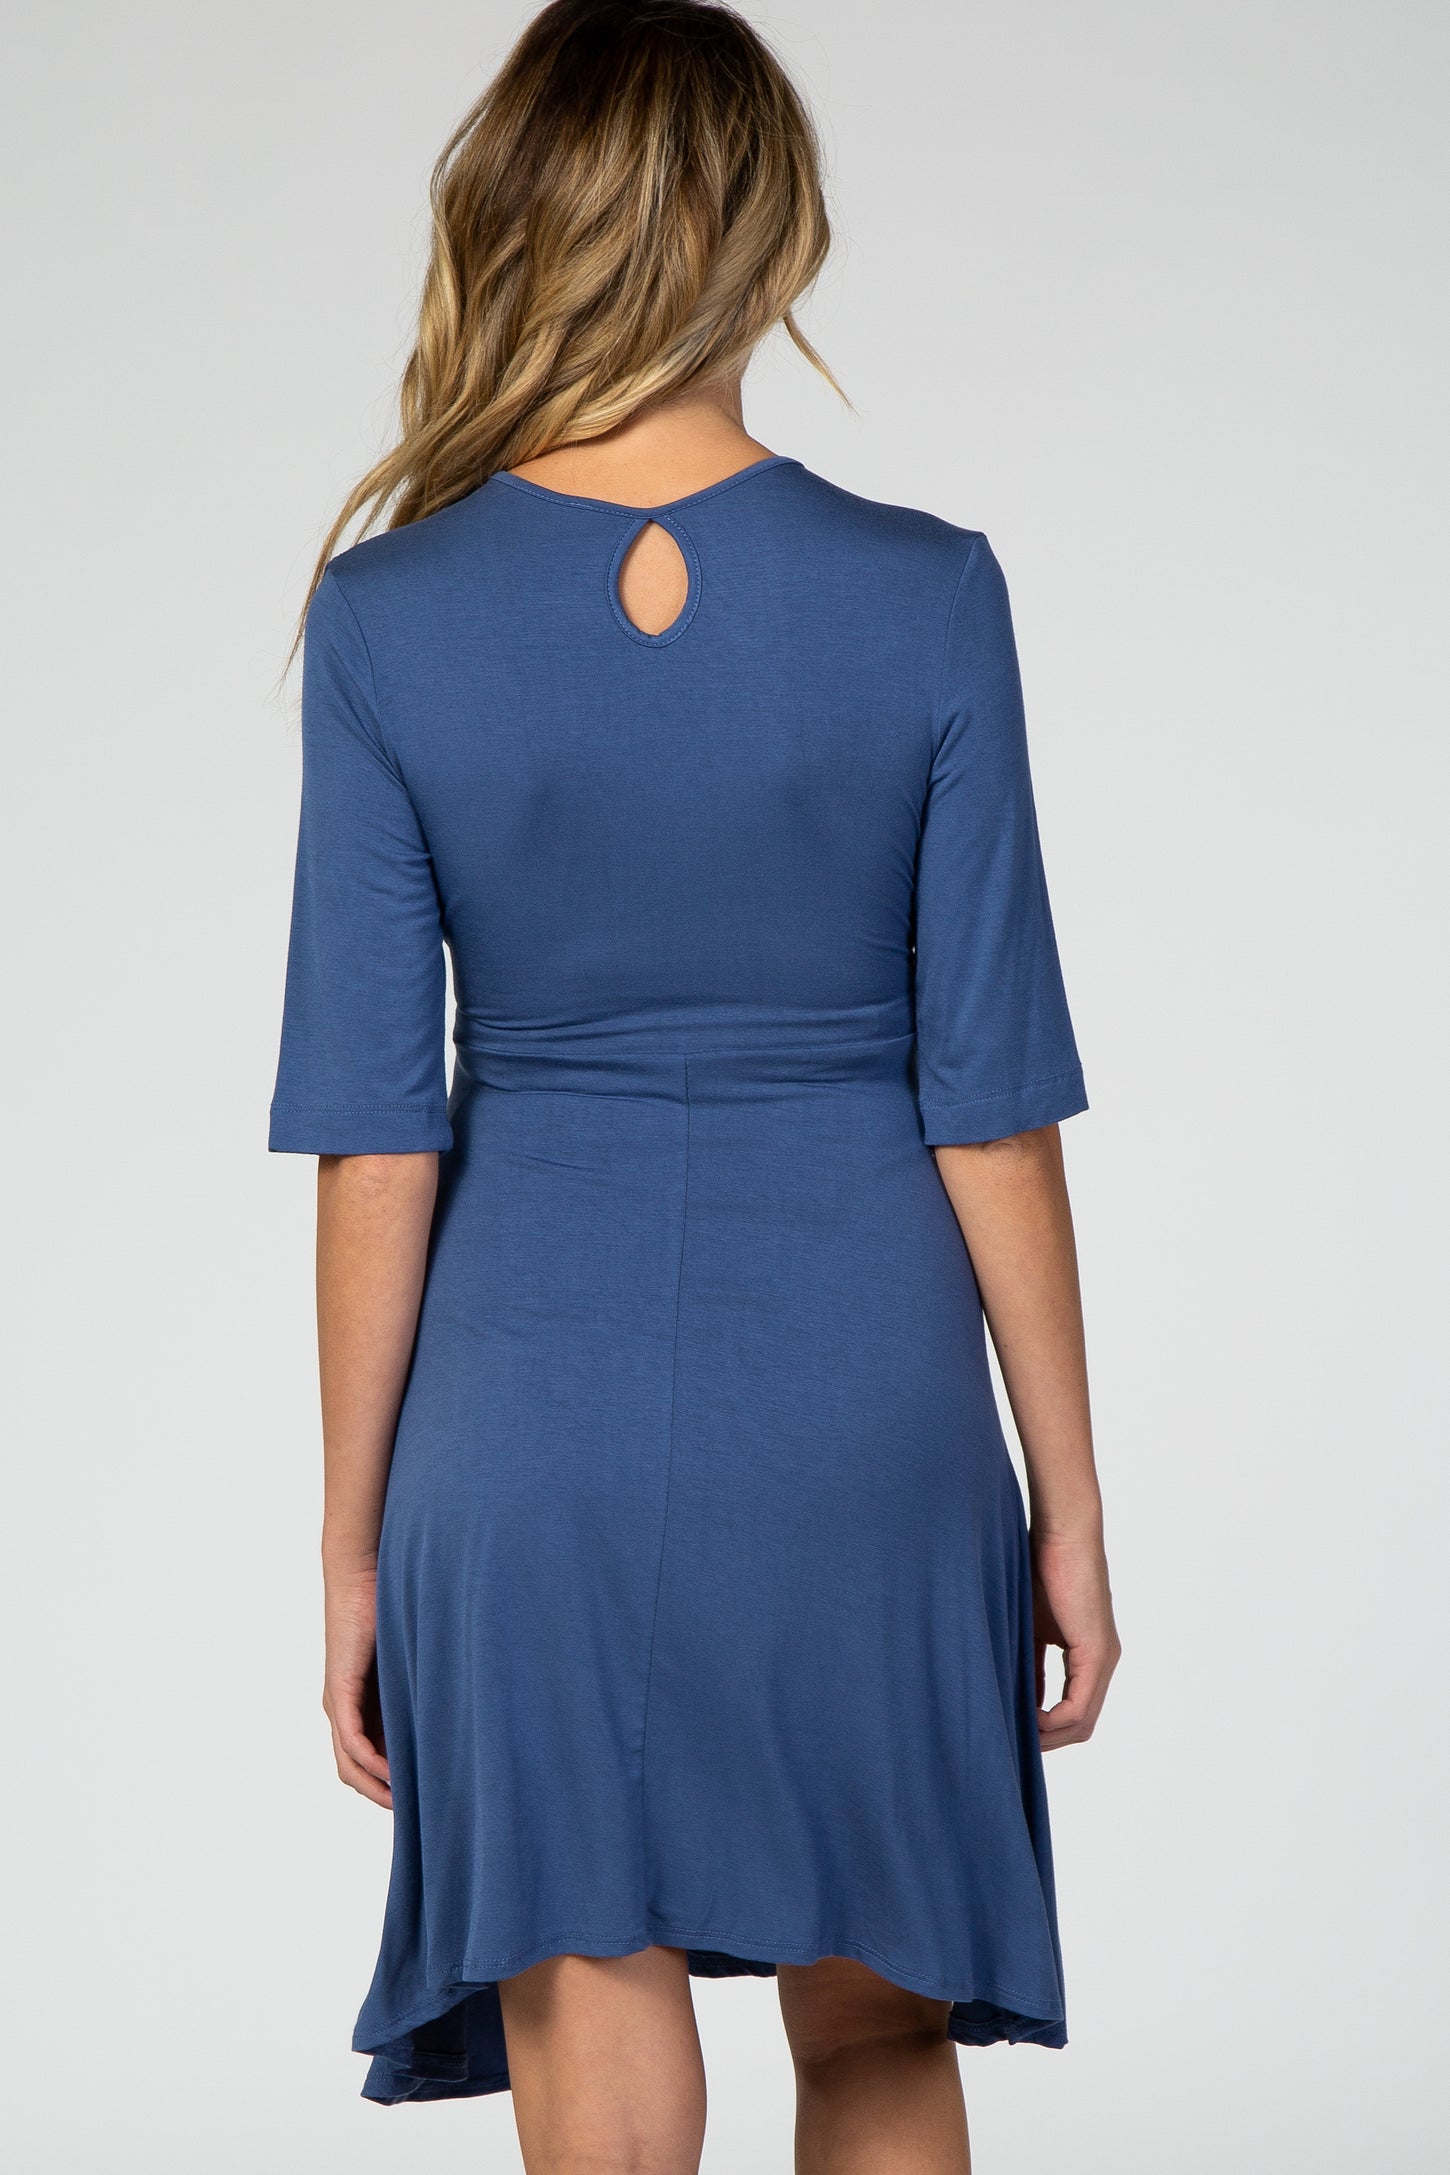 Blue 3/4 Sleeve V-Neck Front Tie Maternity Nursing Dress